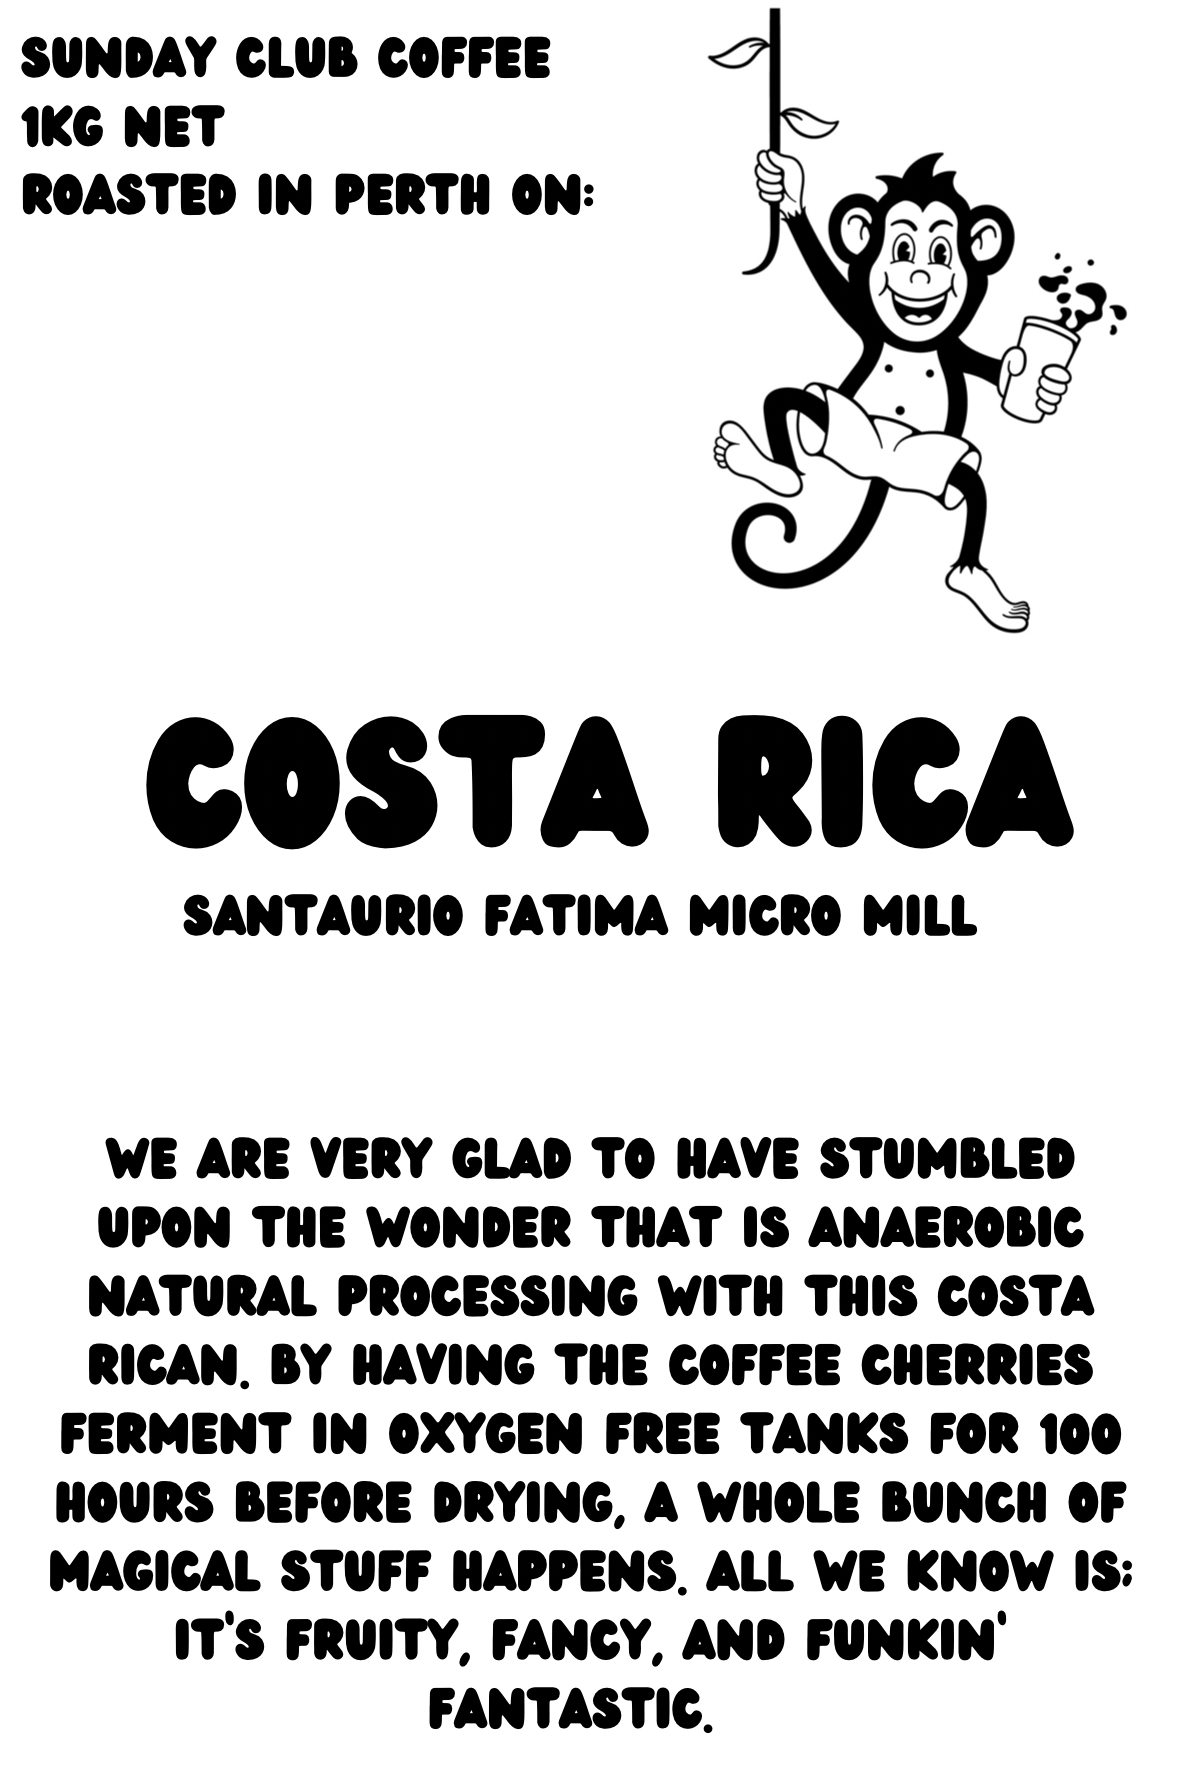 Costa Rica Santaurio Fatima